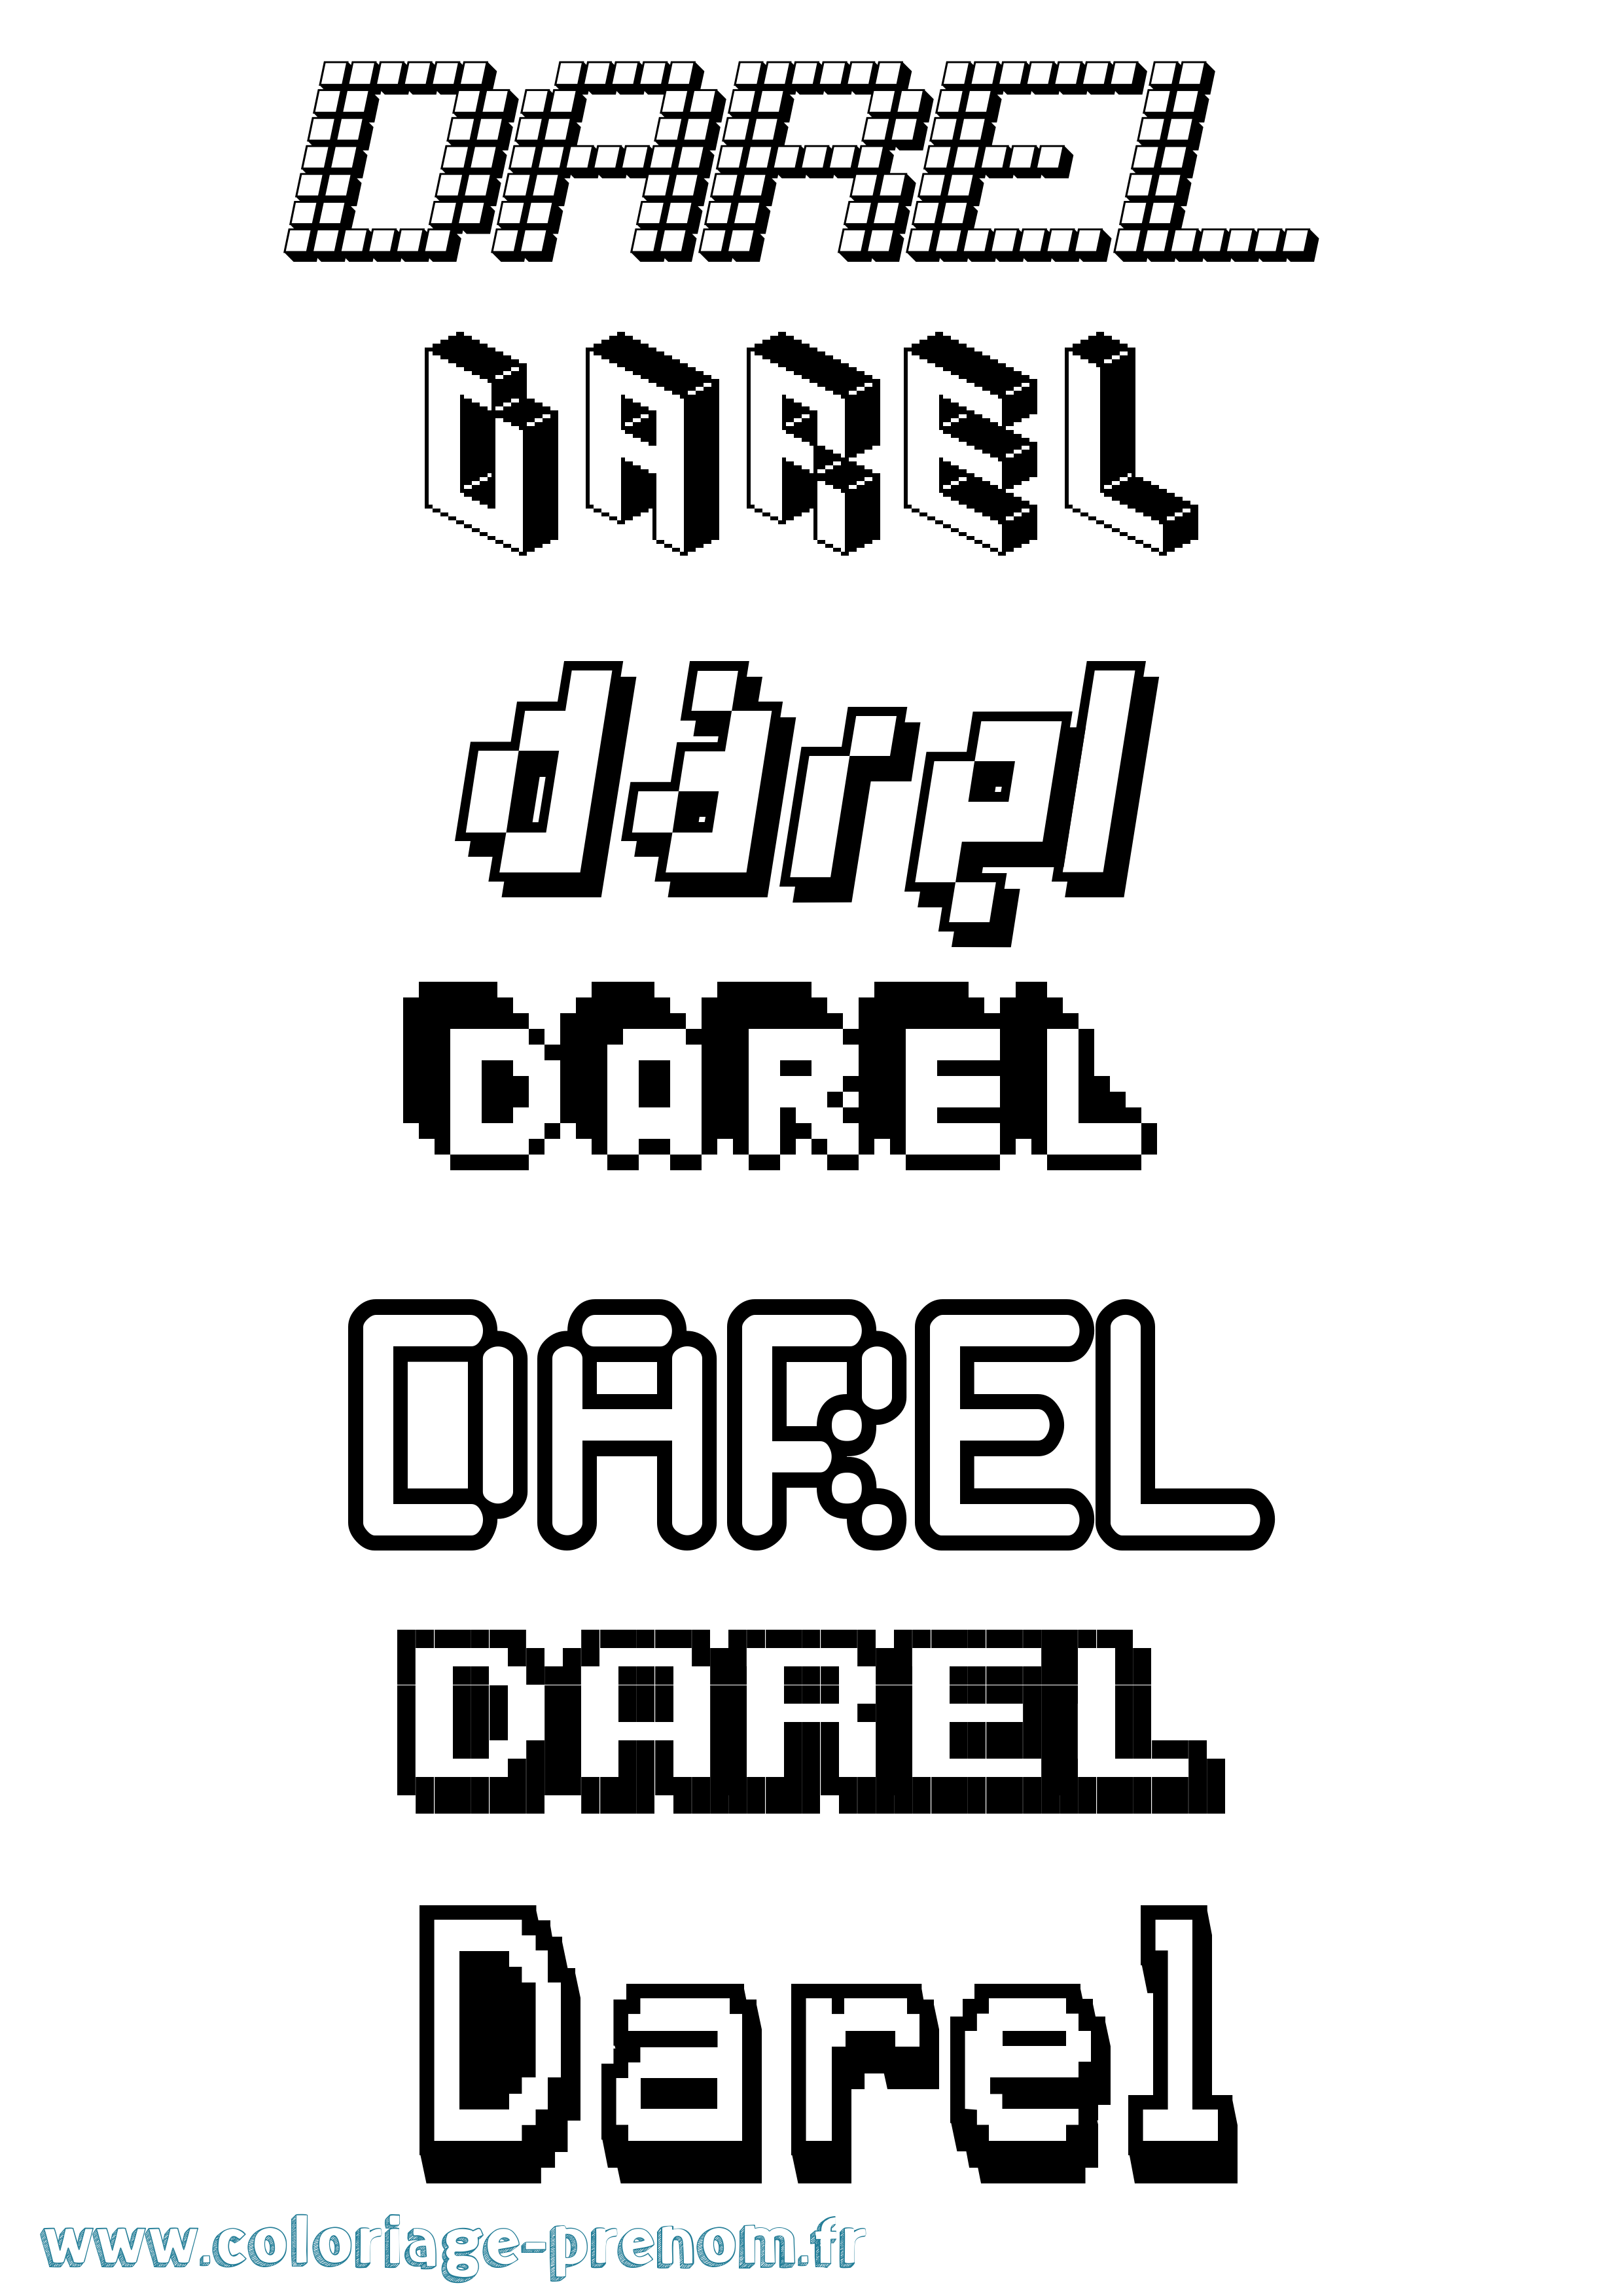 Coloriage prénom Darel Pixel